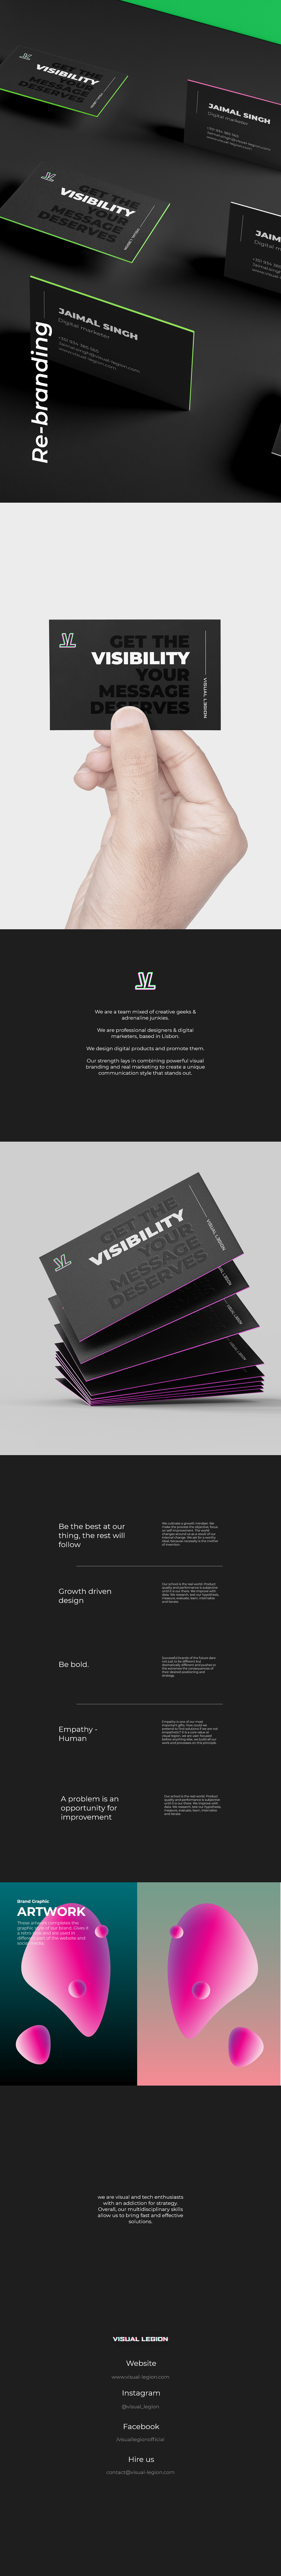 agency branding  digital marketing marketing   online visibility Business Cards brand artwork  brand identity art direction  visual story telling